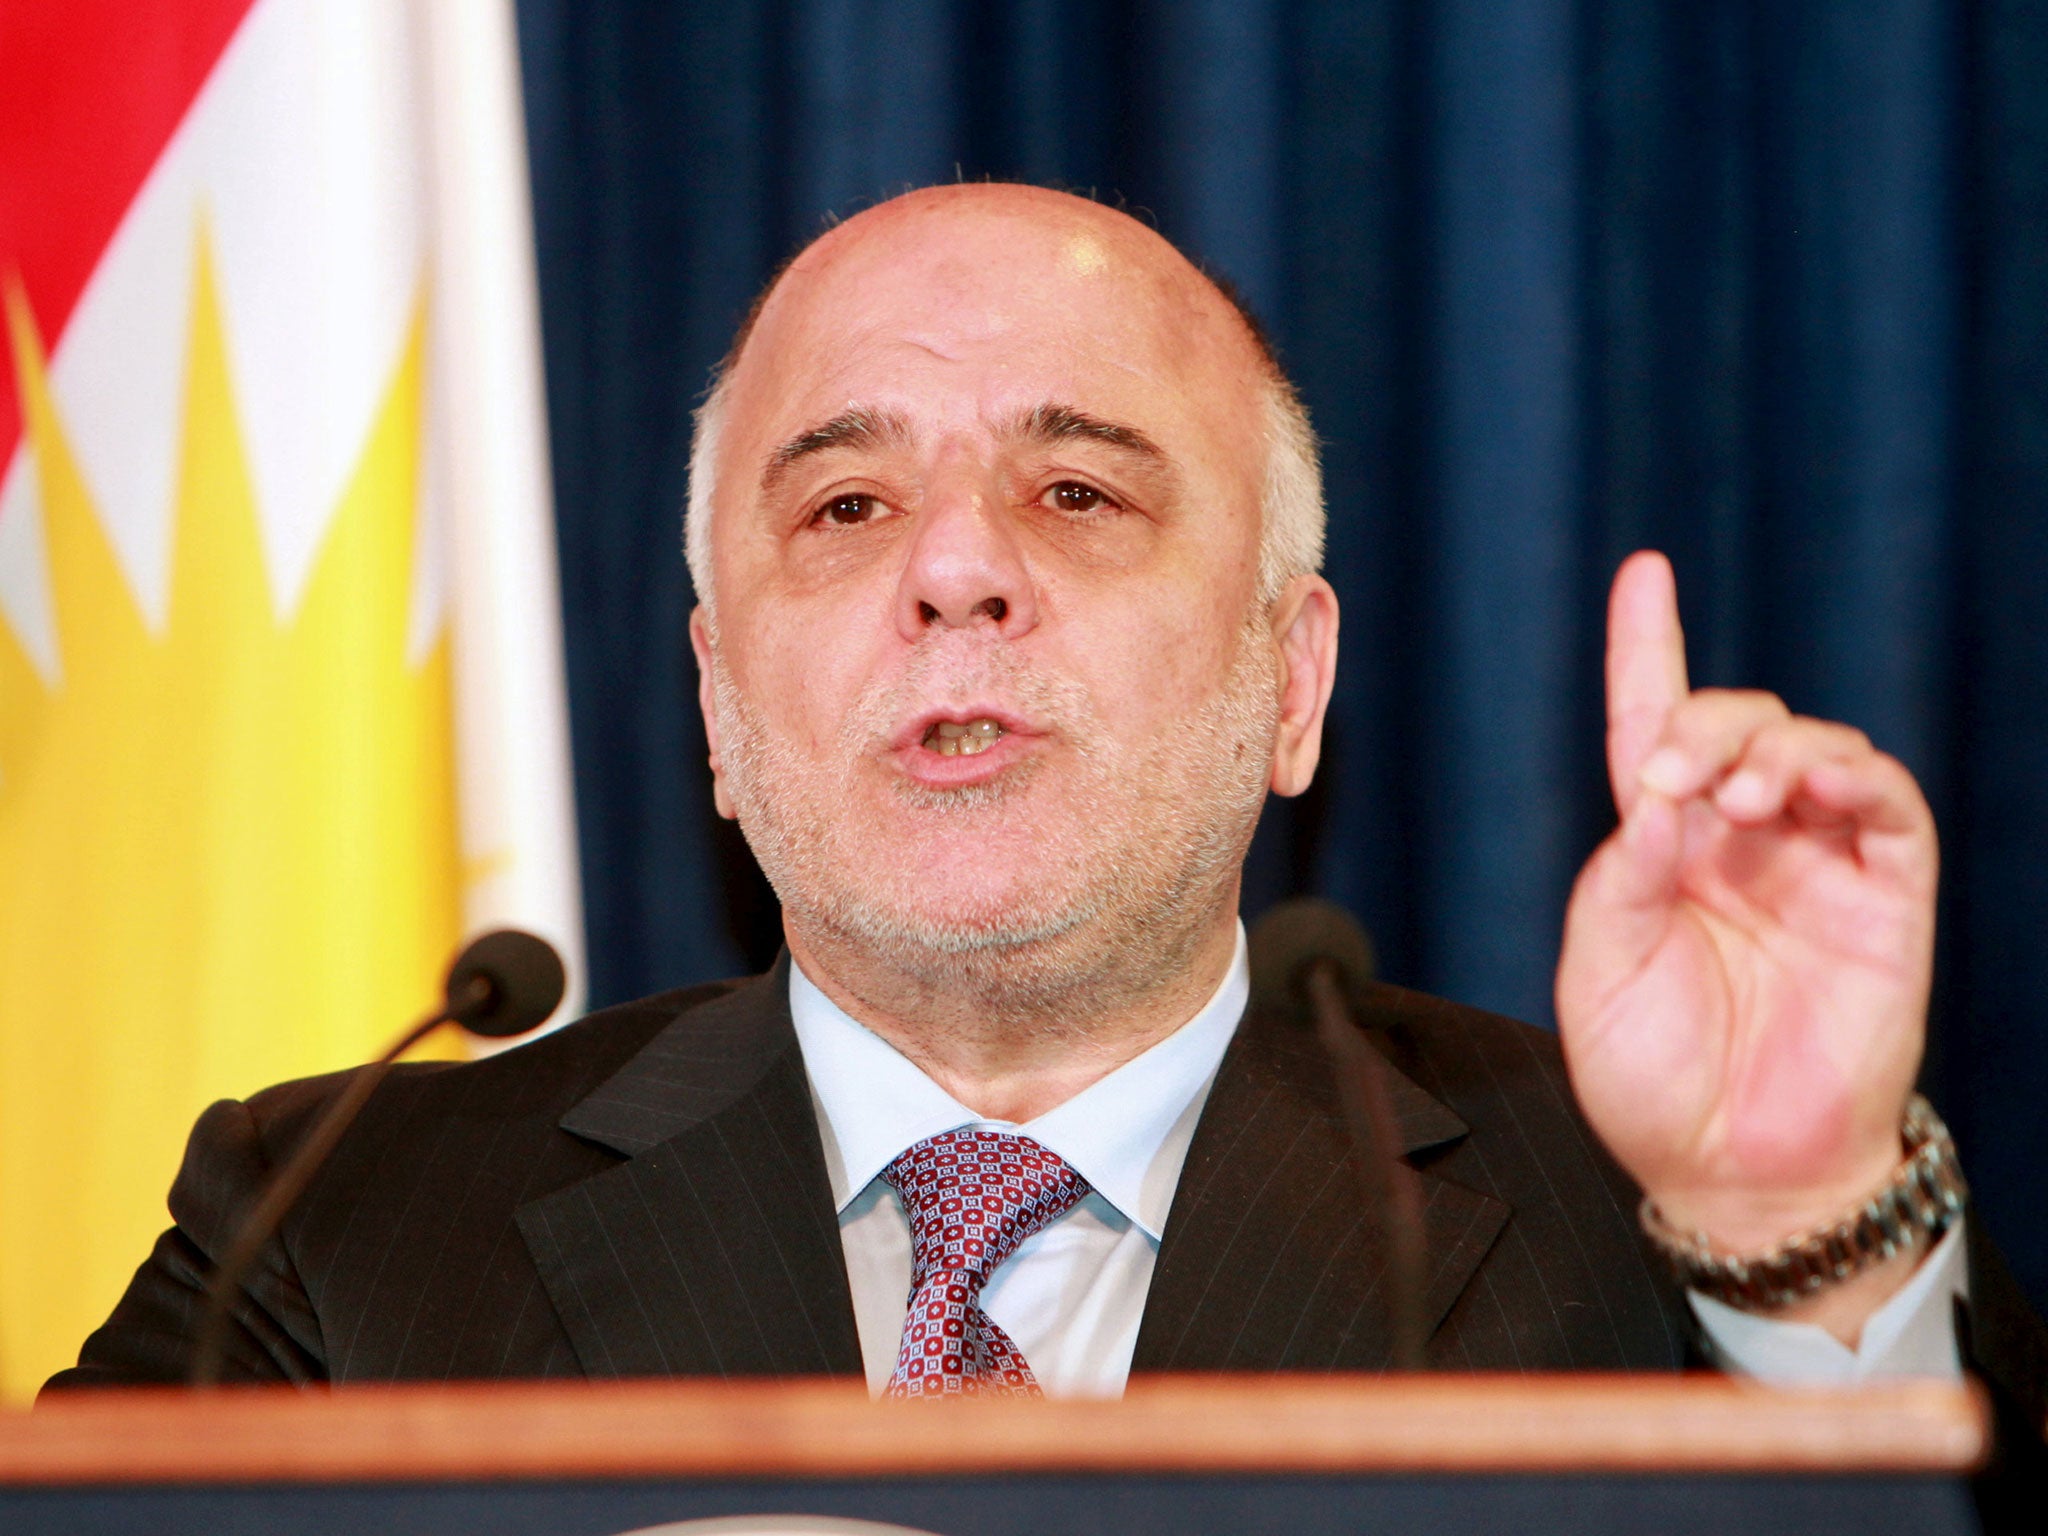 Mr Abadi said he had asked Turkey 'not to intervene in Iraqi matters'